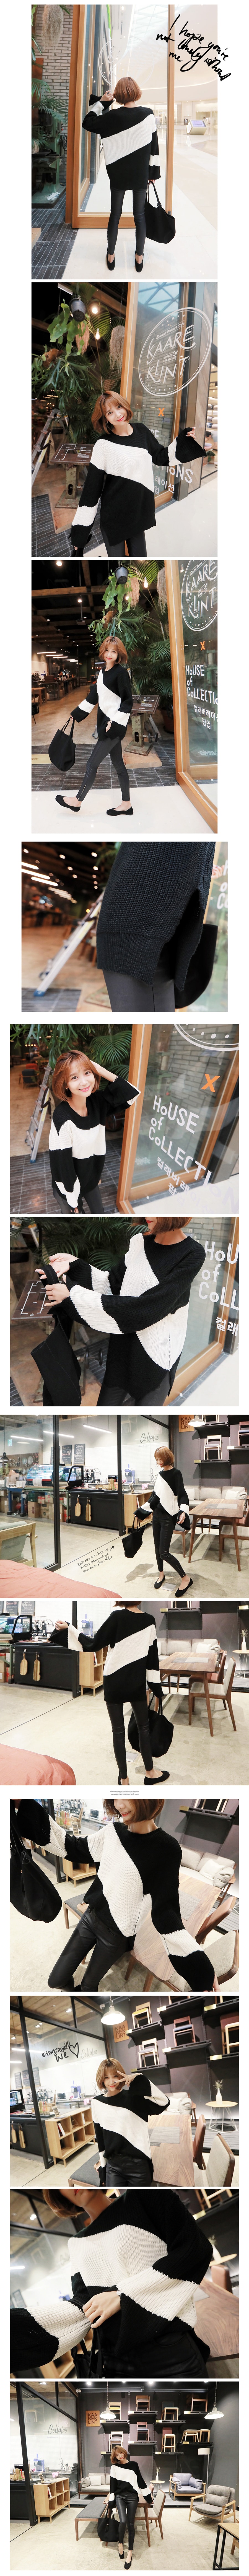 [Autumn New] Oblique Colorblock Knit Sweater Black One Size(S-M)